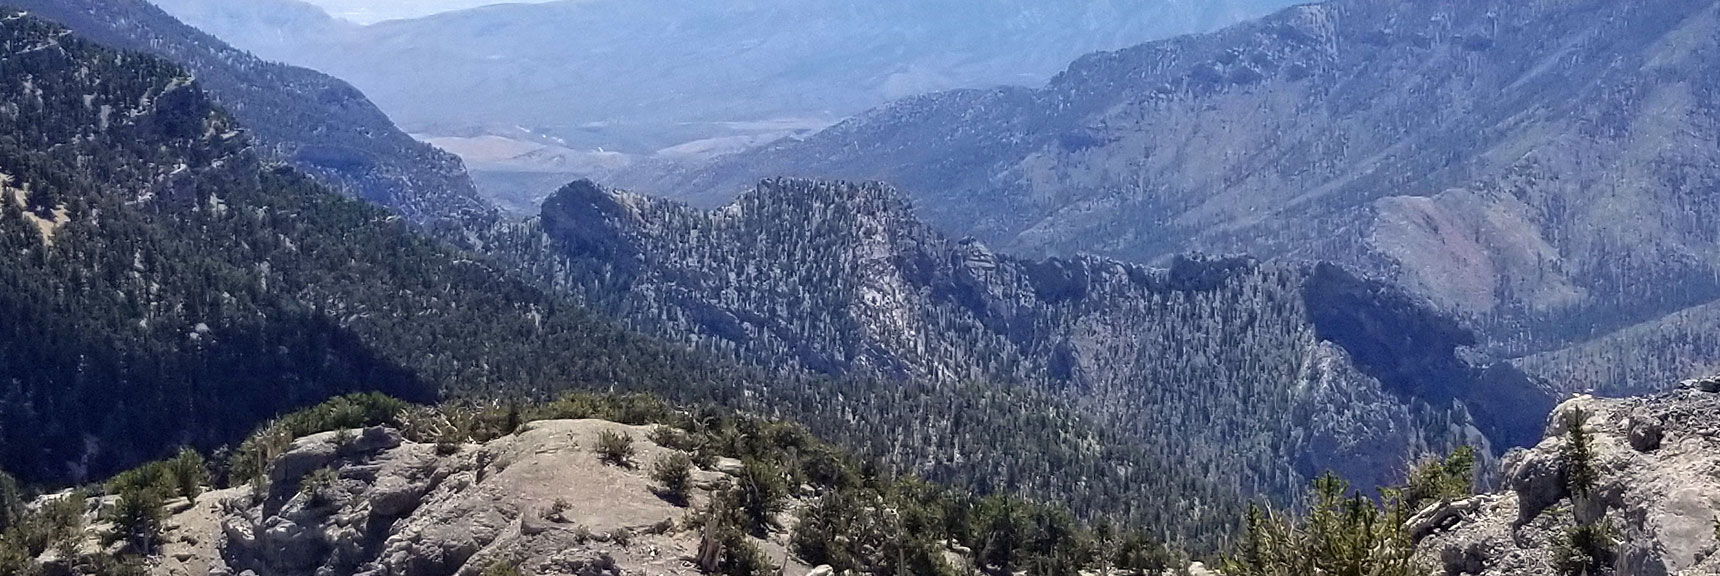 Cockscomb Peak and Ridge Viewed from Lee Peak Summit in Mt Charleston Wilderness, Nevada